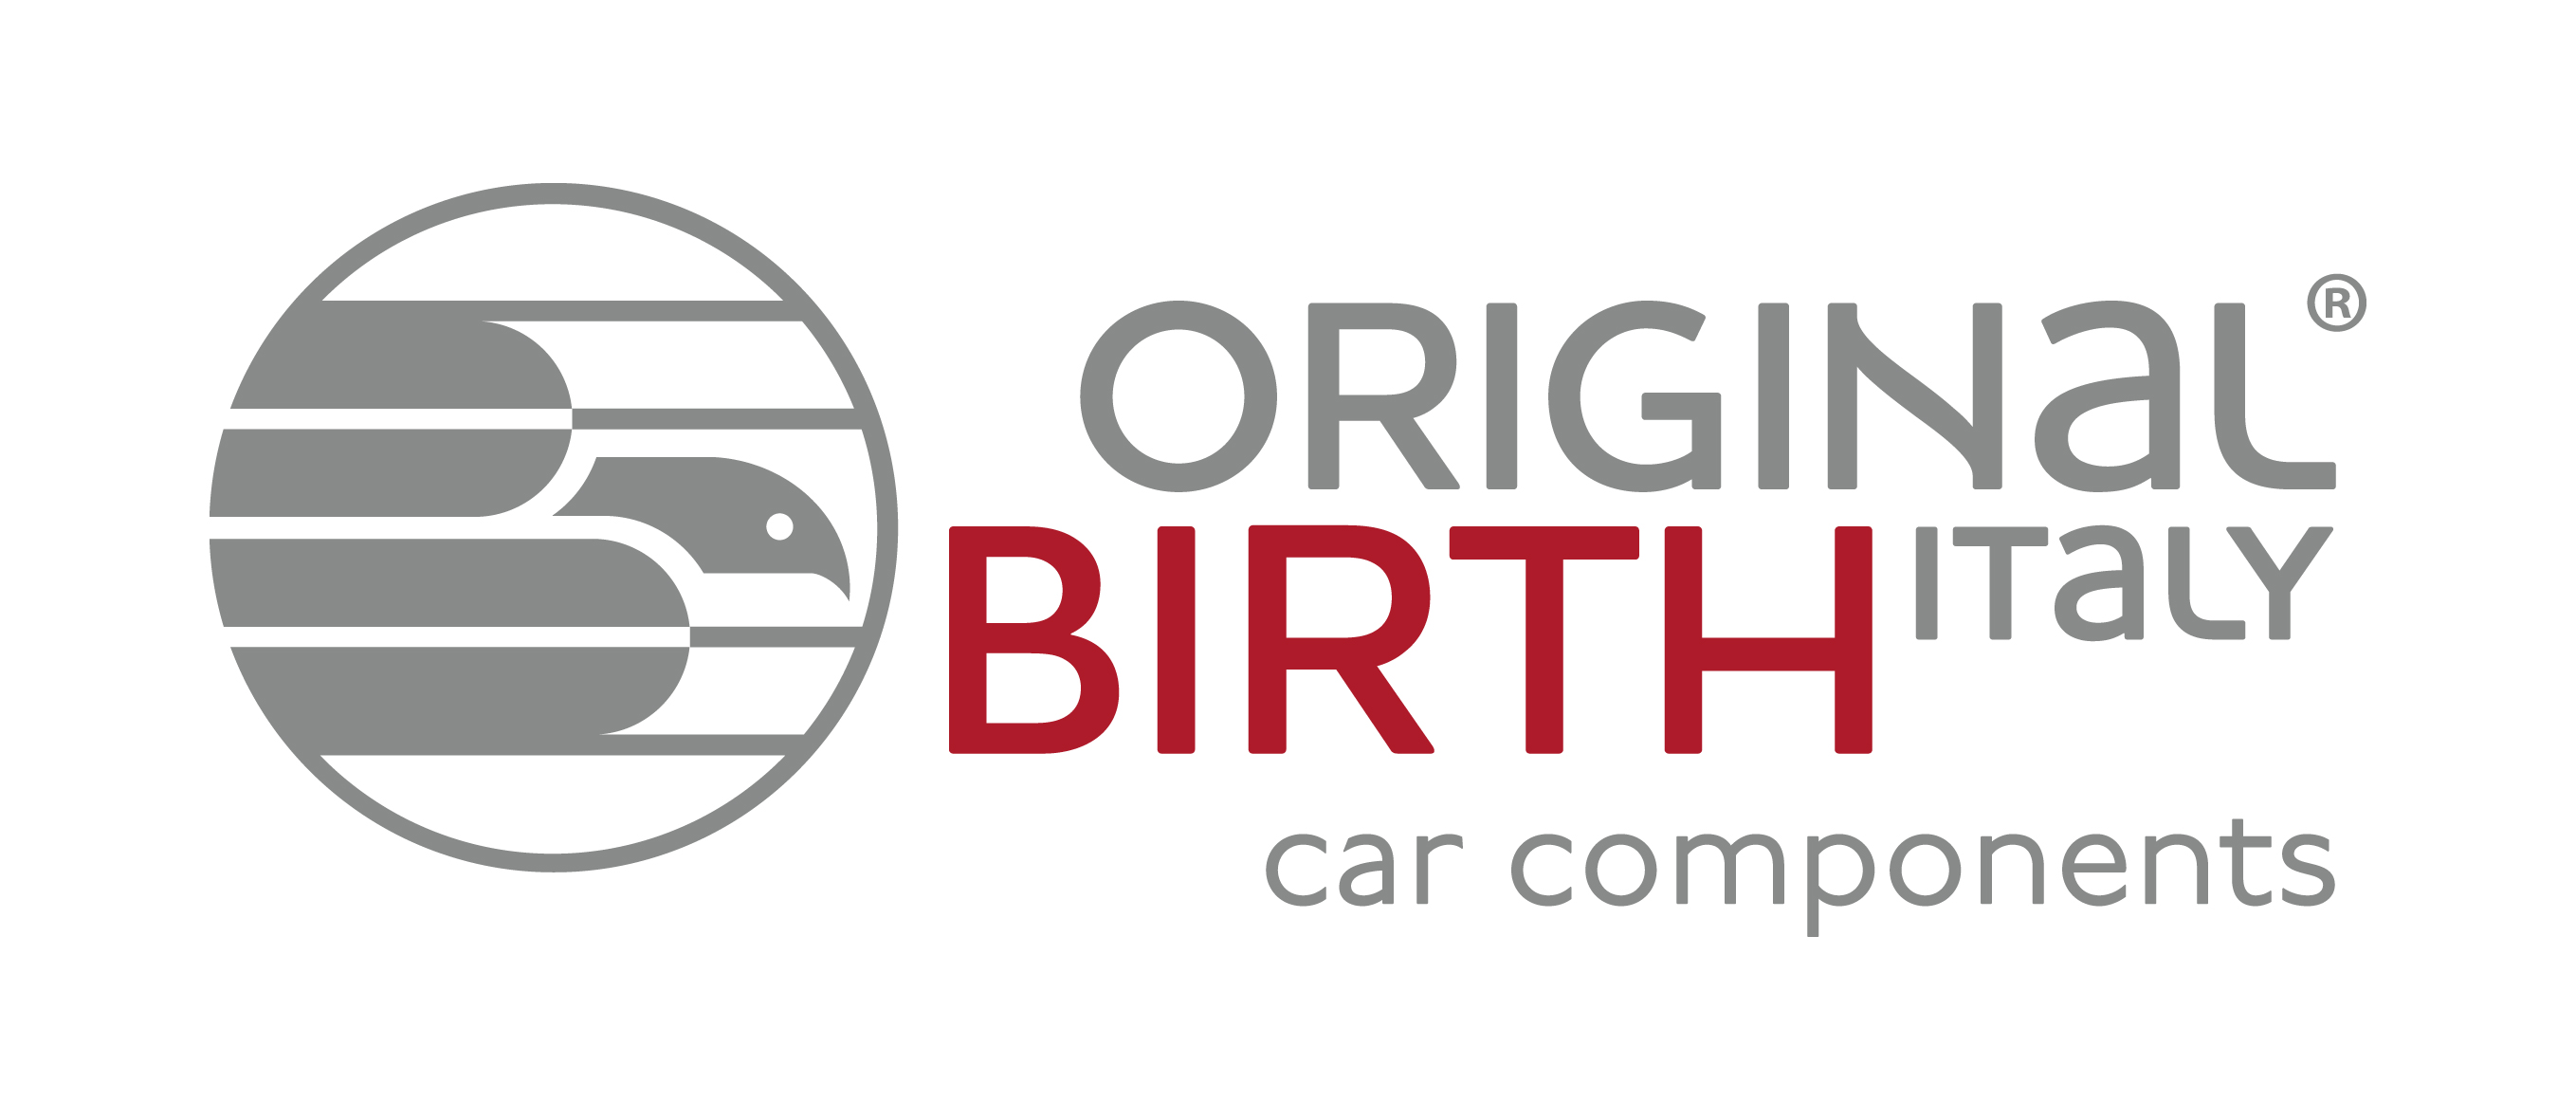 Original Birth